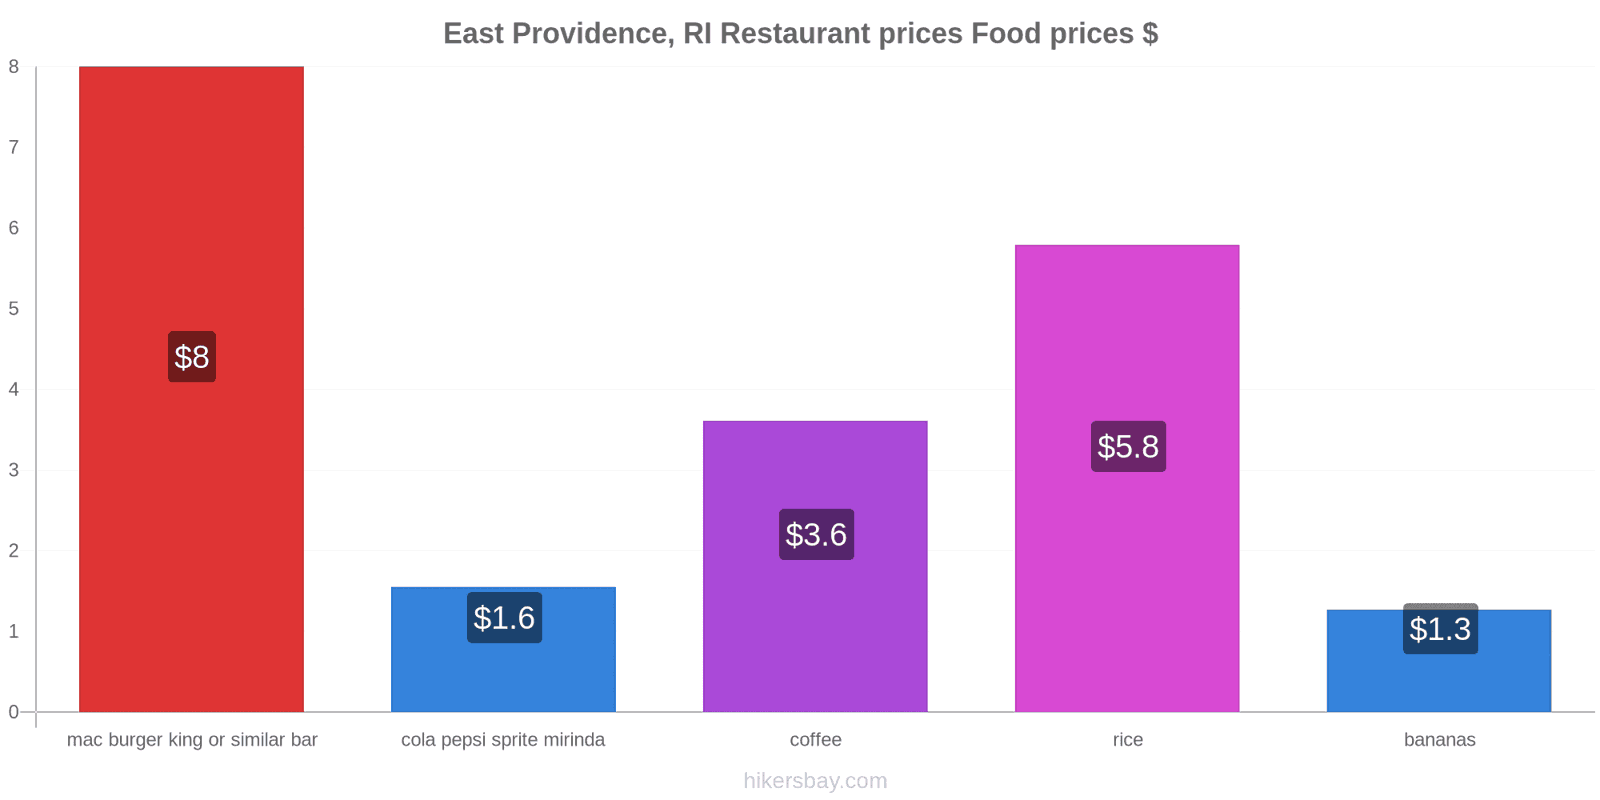 East Providence, RI price changes hikersbay.com